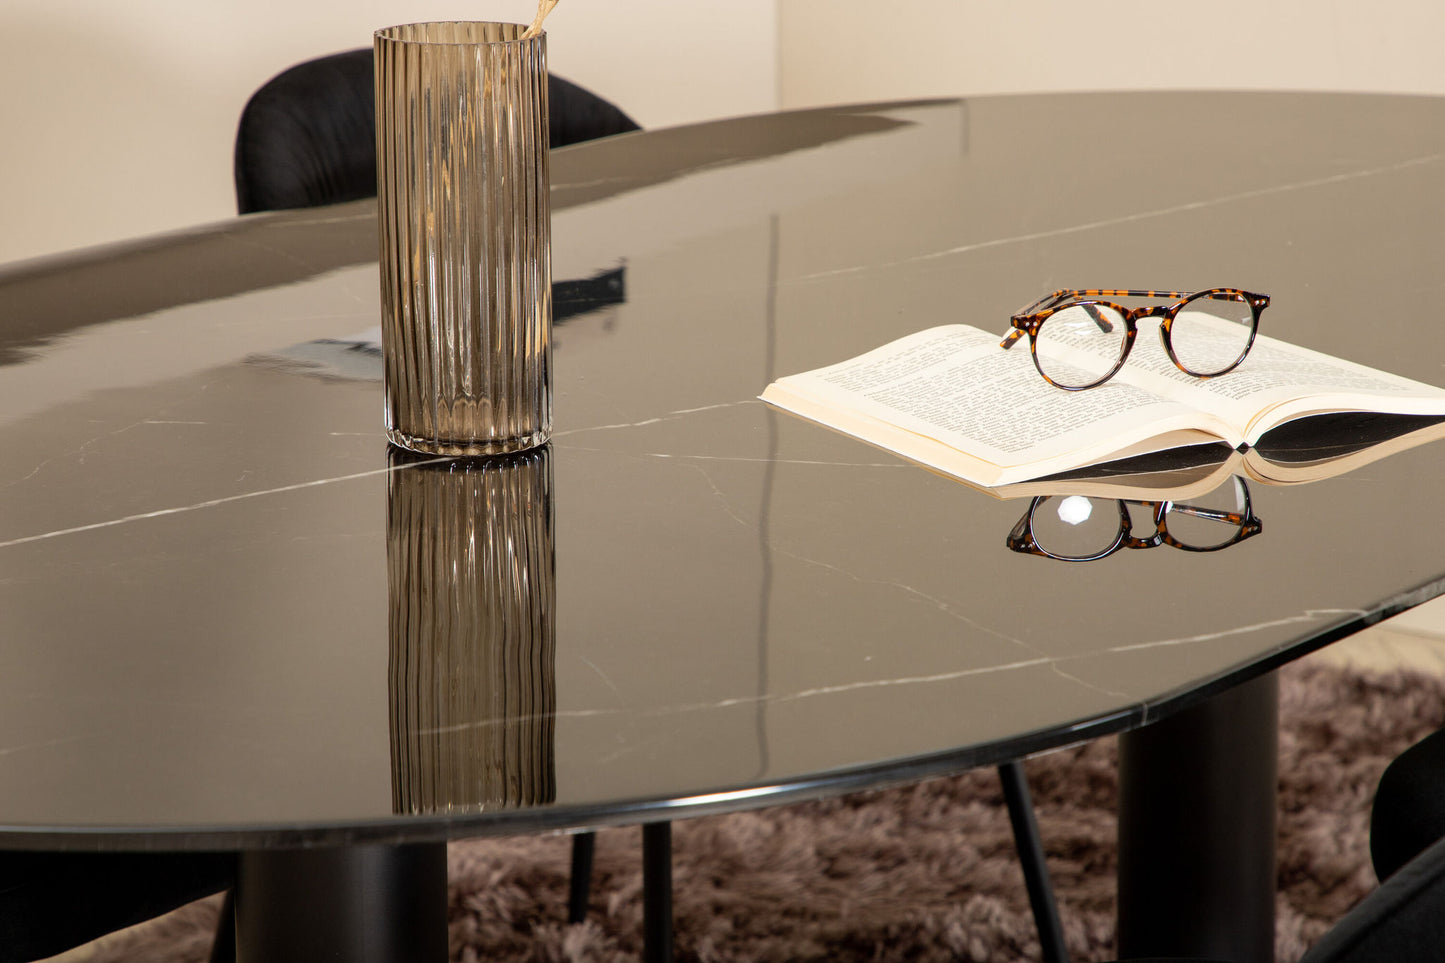 Pillan - Ovalt spisebord, Sort glas Marmor+Wrikles Spisebordsstol , Sorte ben, Sort velour